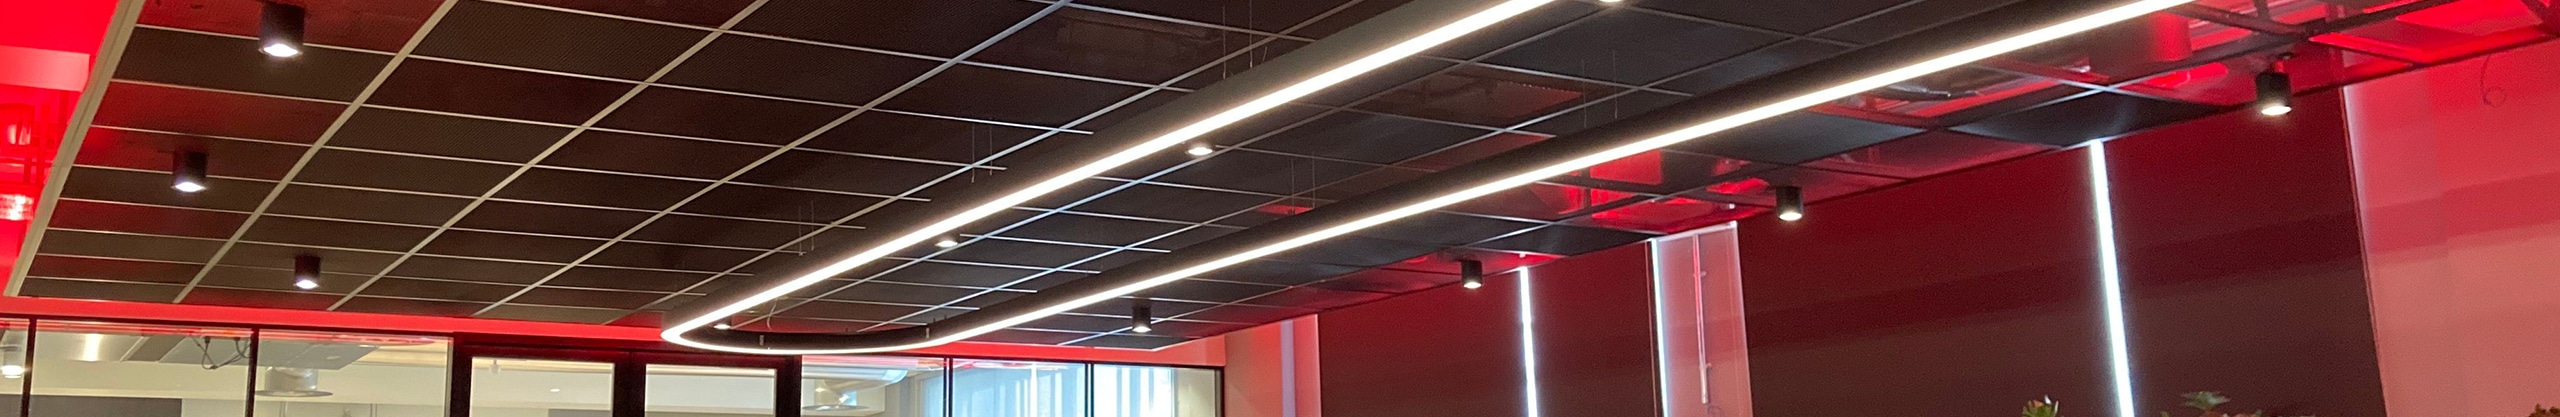 bespoke boardroom lighting